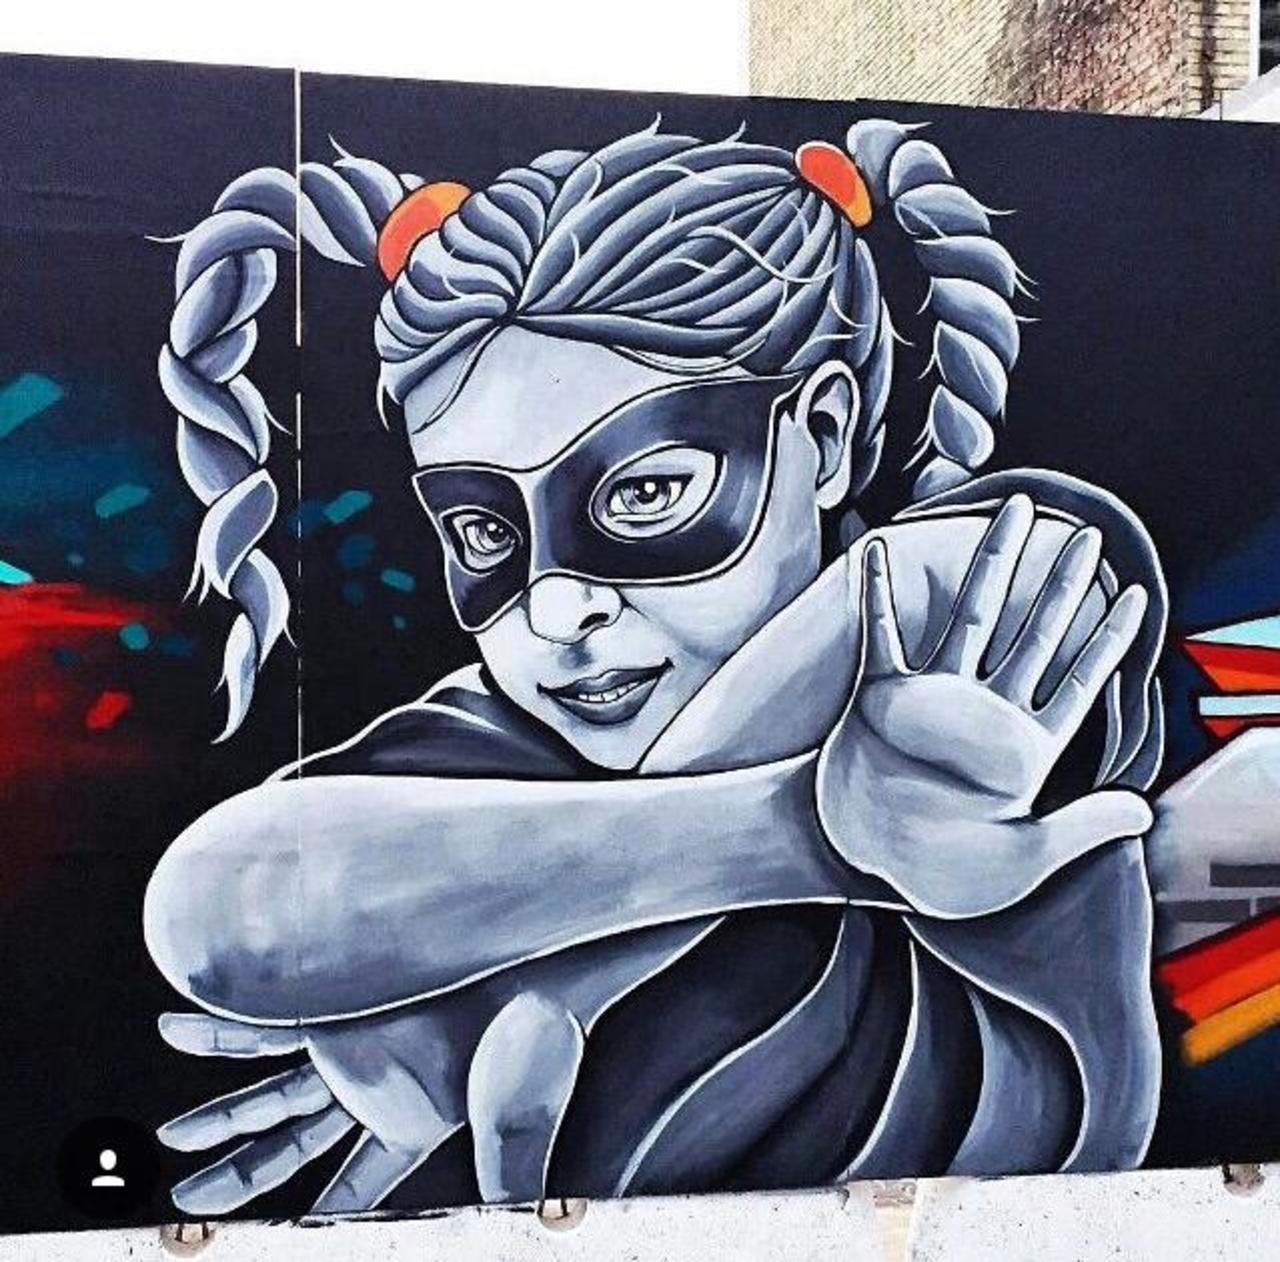 RT @GoogleStreetArt: Street Art by Stinehvid 

#art #graffiti #mural #streetart http://t.co/L2KG96wsBC